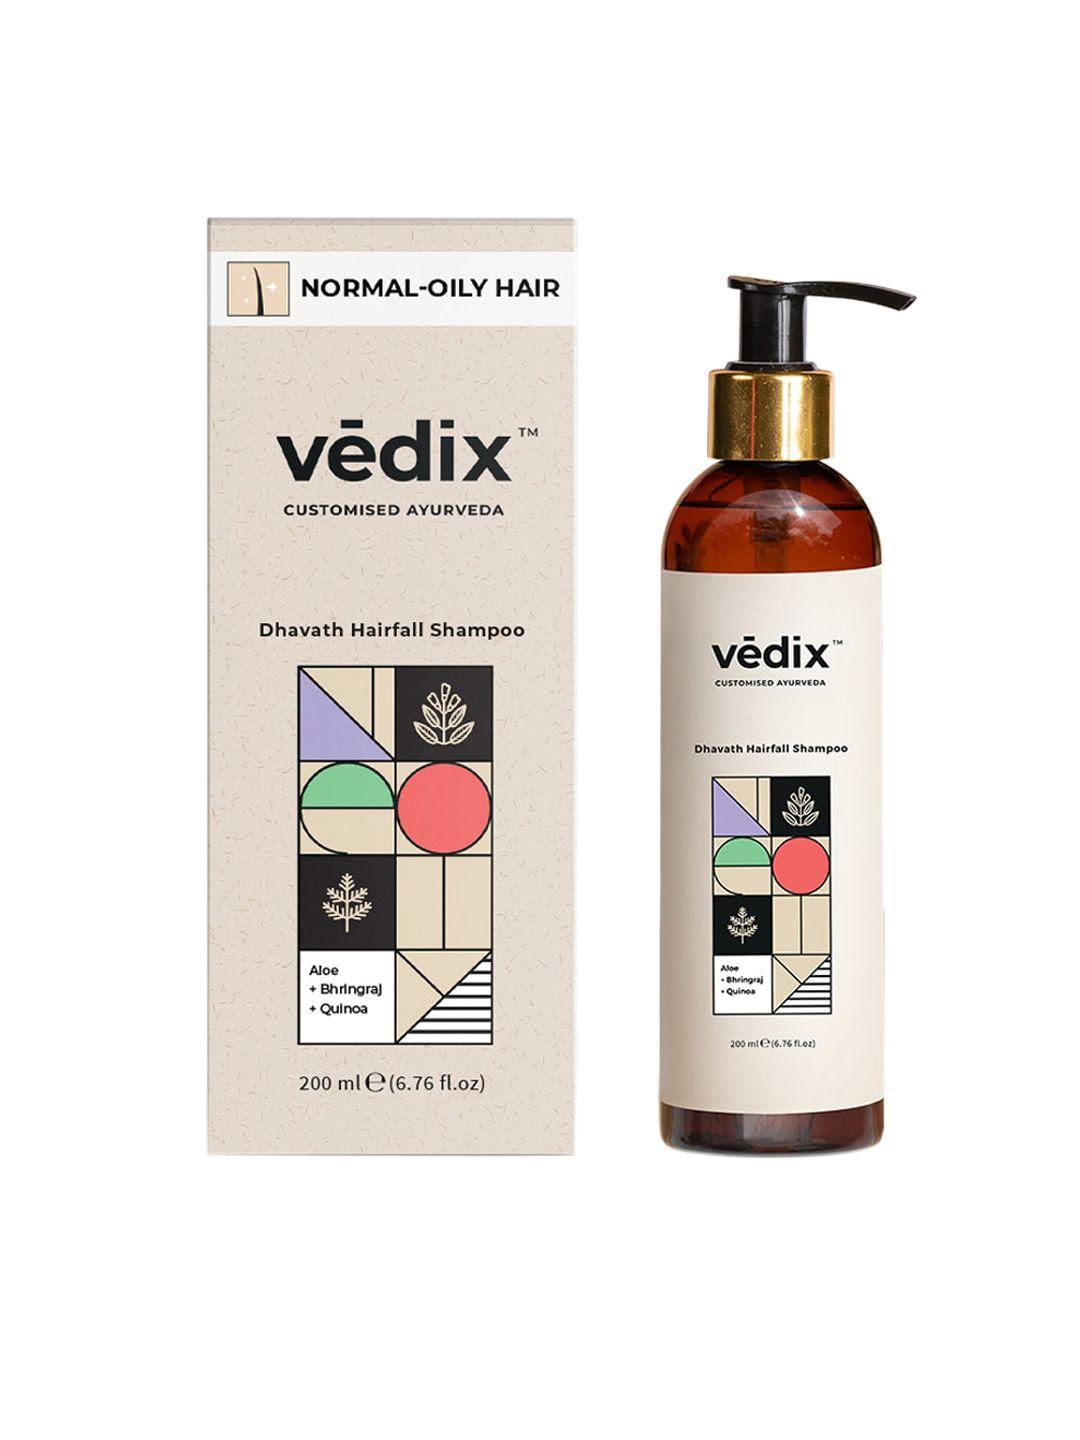 vedix customized ayurvedic dhavath hairfall shampoo - for normal & oily hair